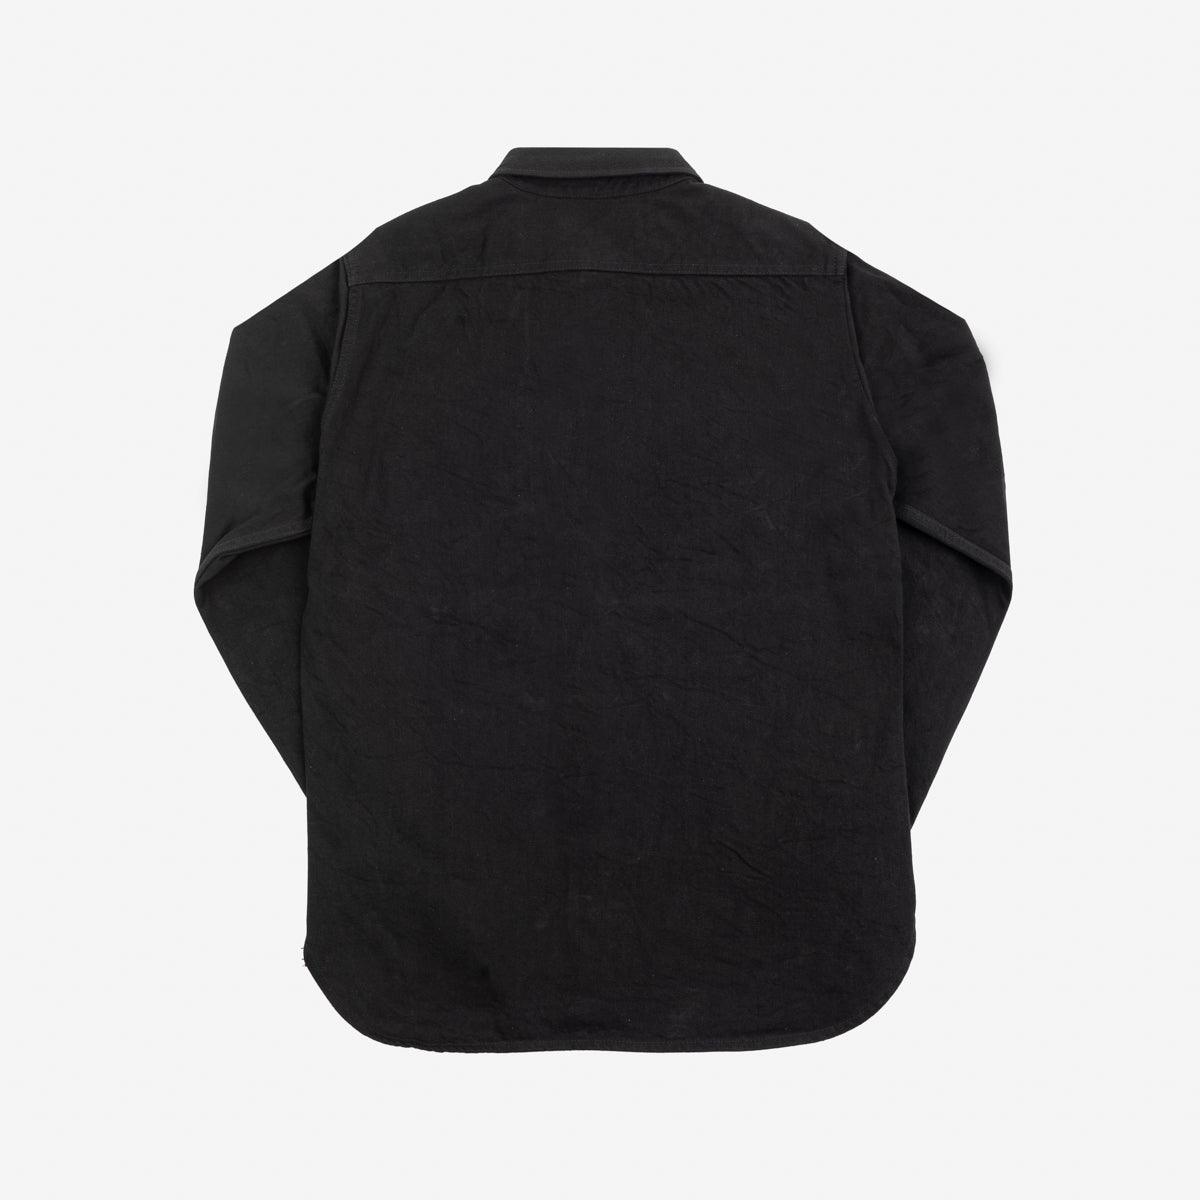 IHSH-338-BLK - 12oz Selvedge Denim Work Shirt With Snaps - Black/Black